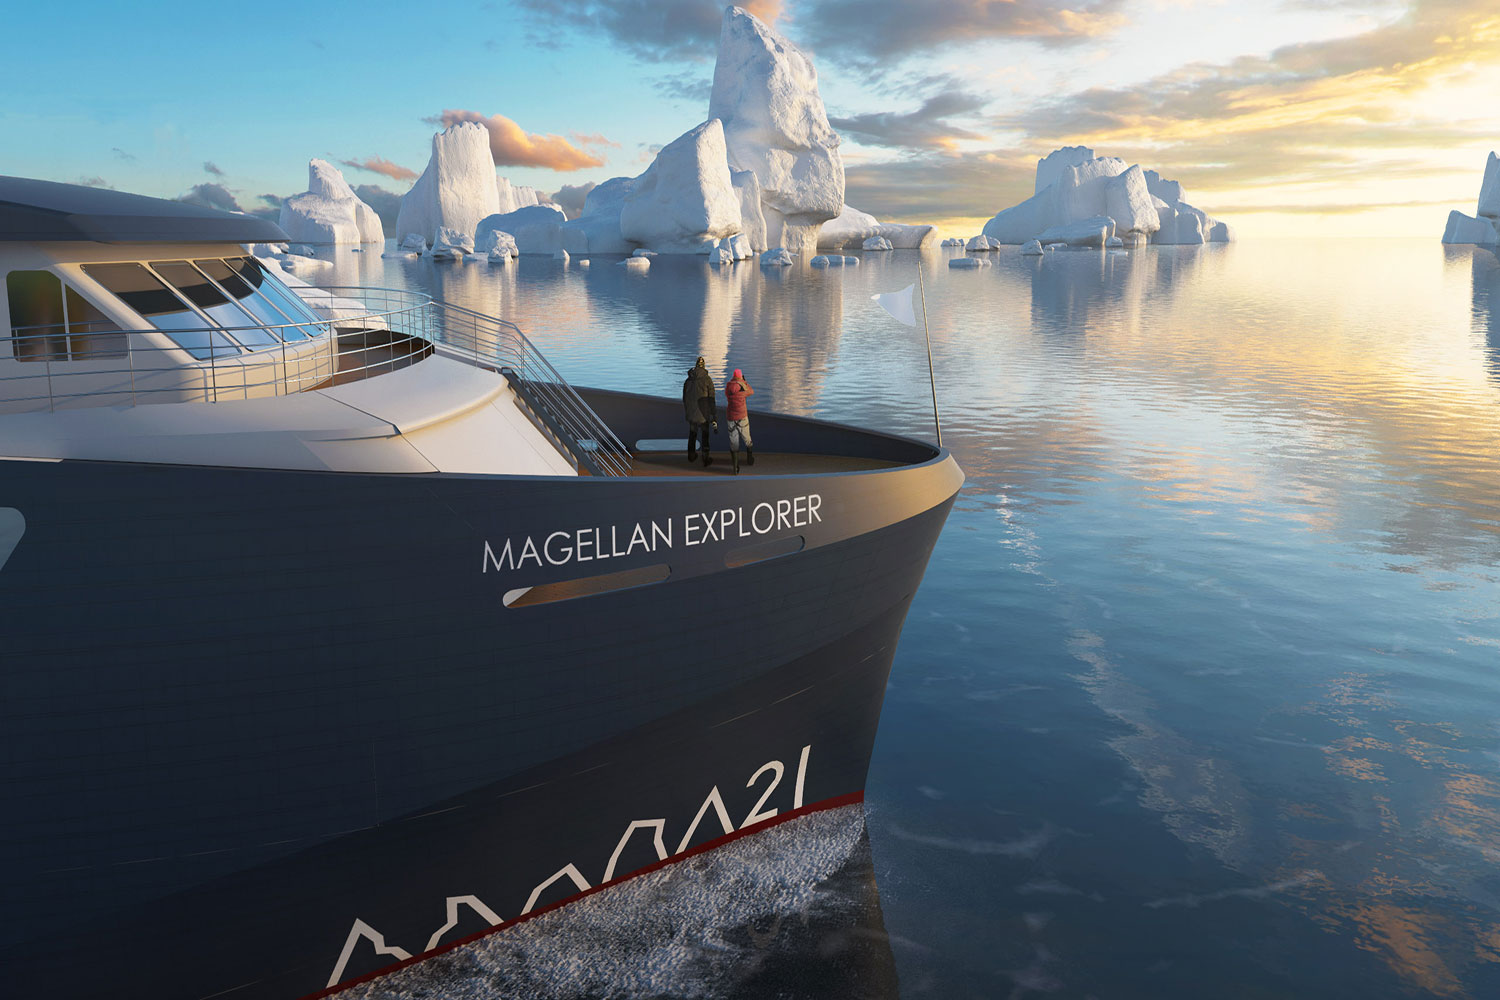 Magellan Explorer expedition vessel